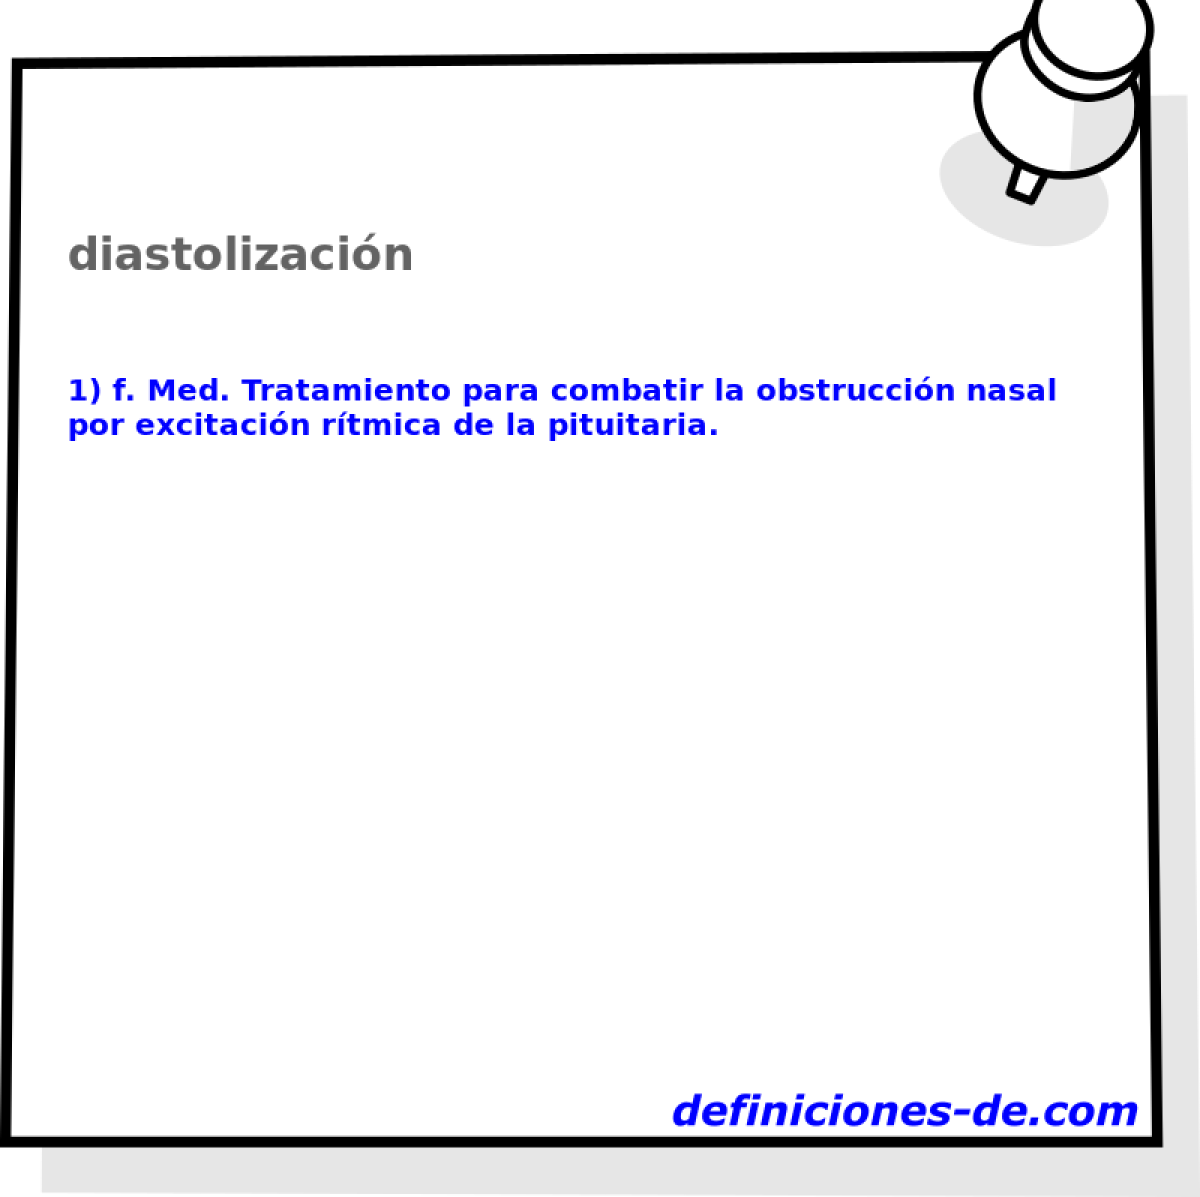 diastolizacin 